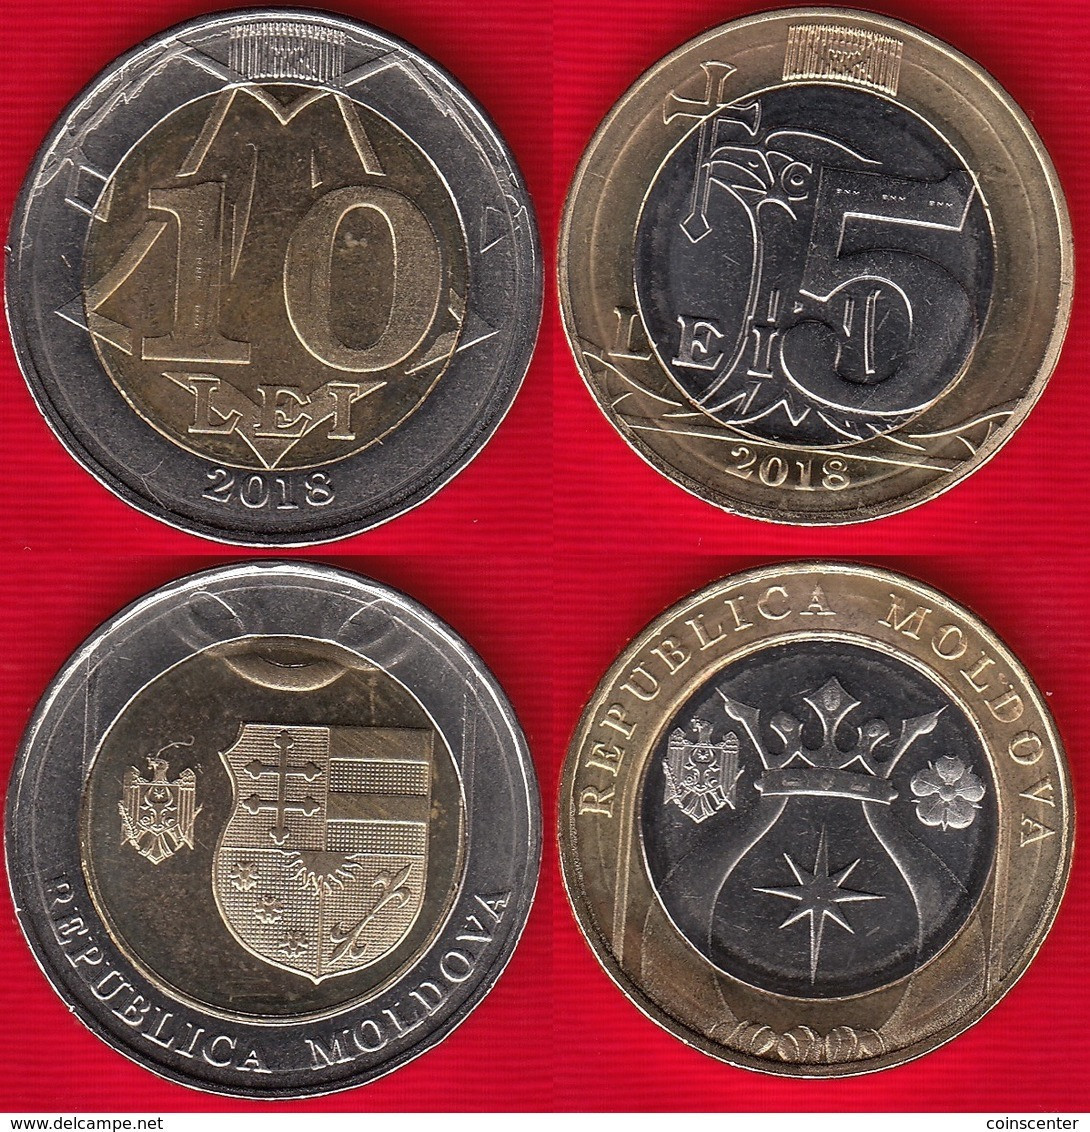 Moldova Set Of 2 Coins: 5 - 10 Lei 2018 BiMetallic UNC - Moldova